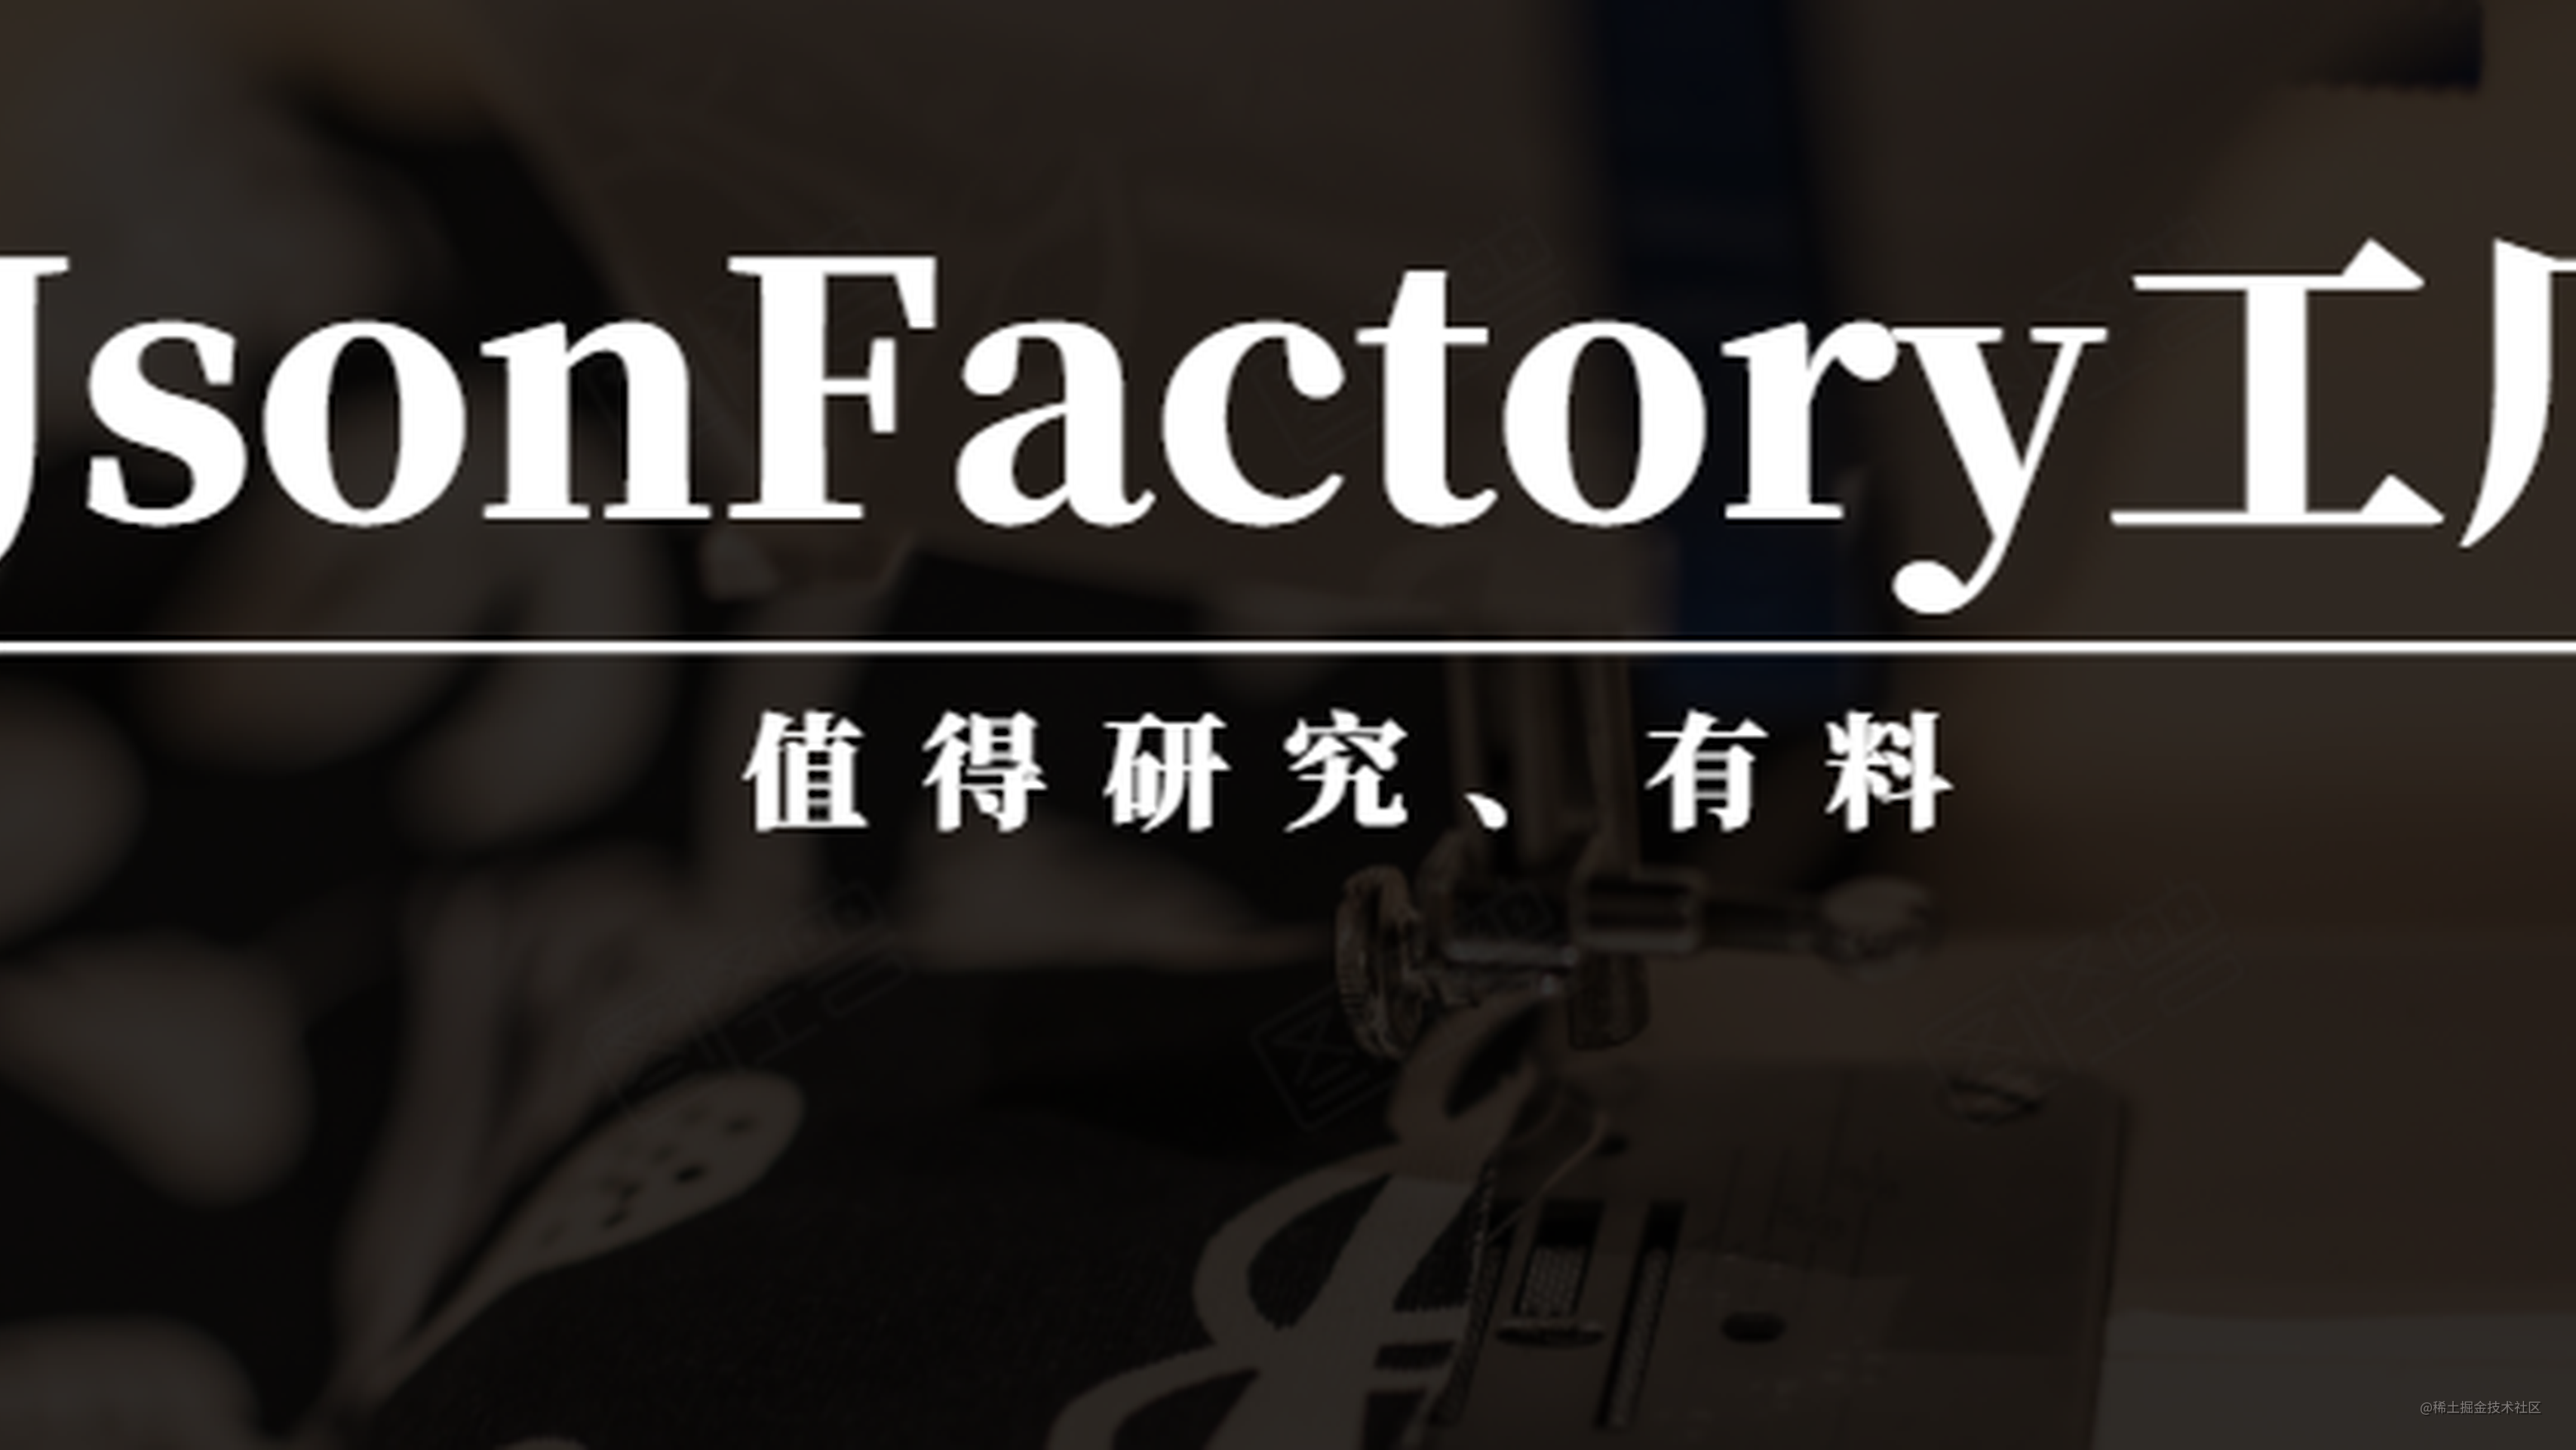 5. JsonFactory工厂而已，还蛮有料，这是我没想到的